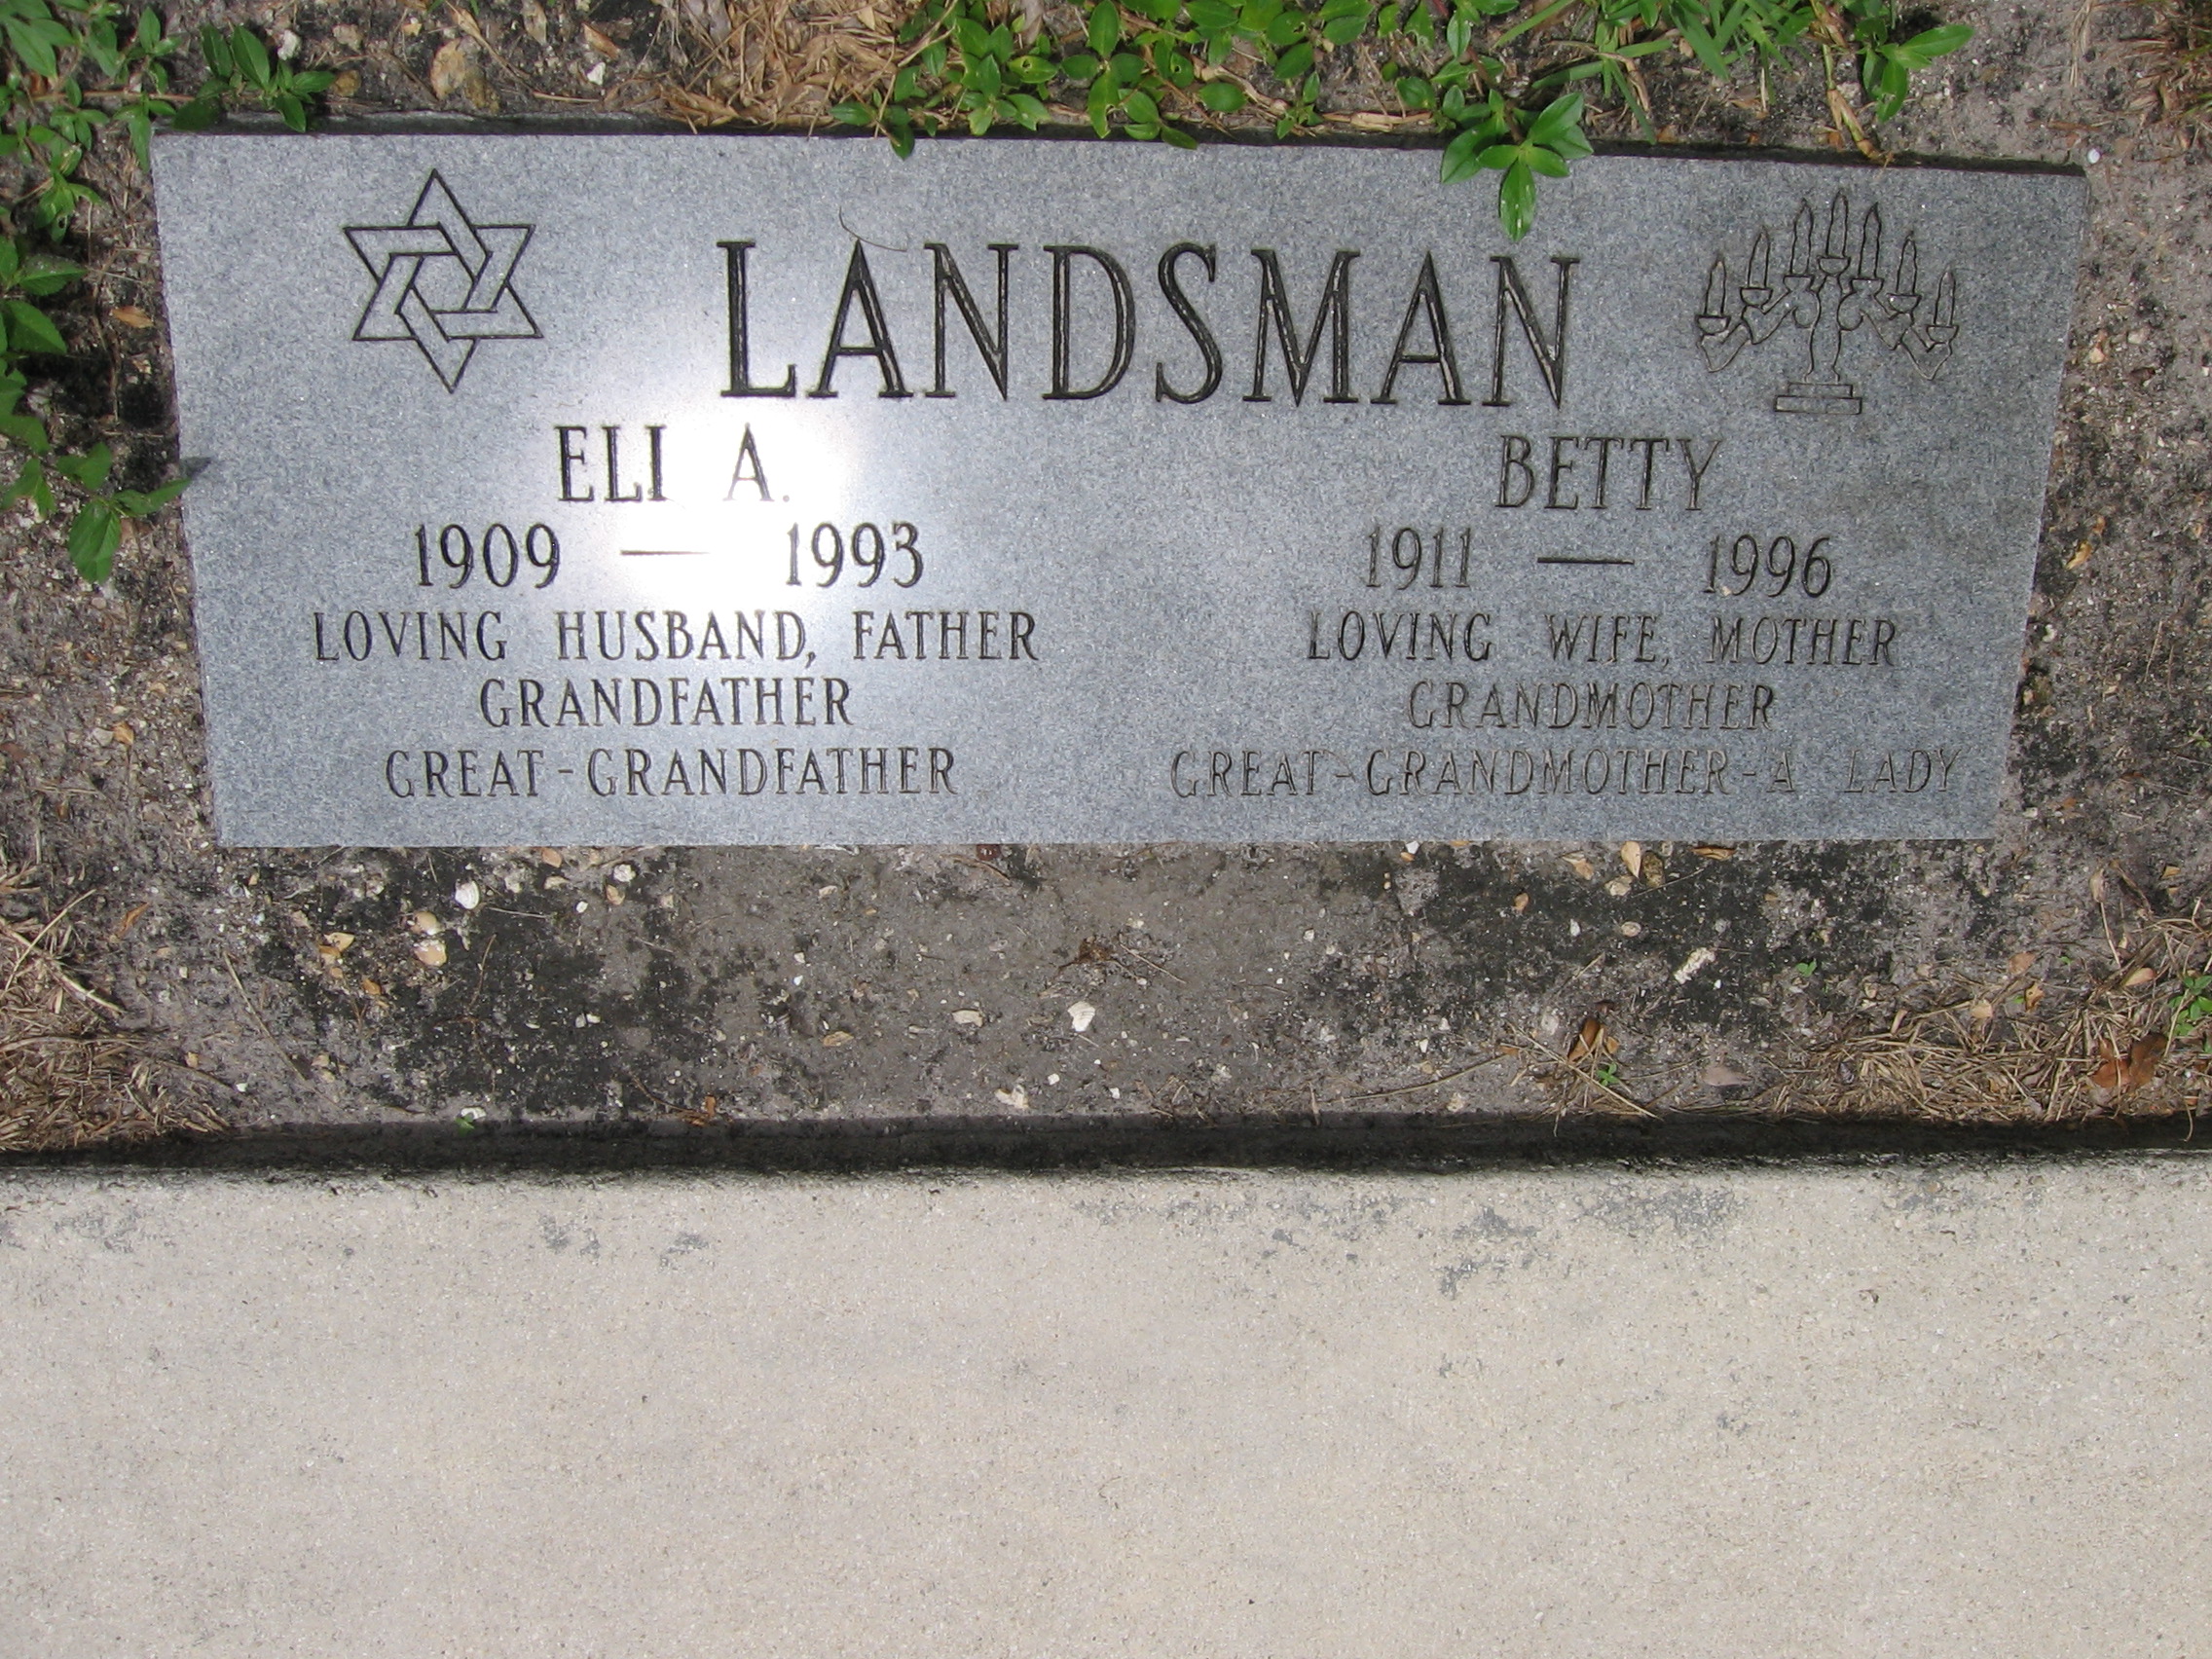 Betty Landsman